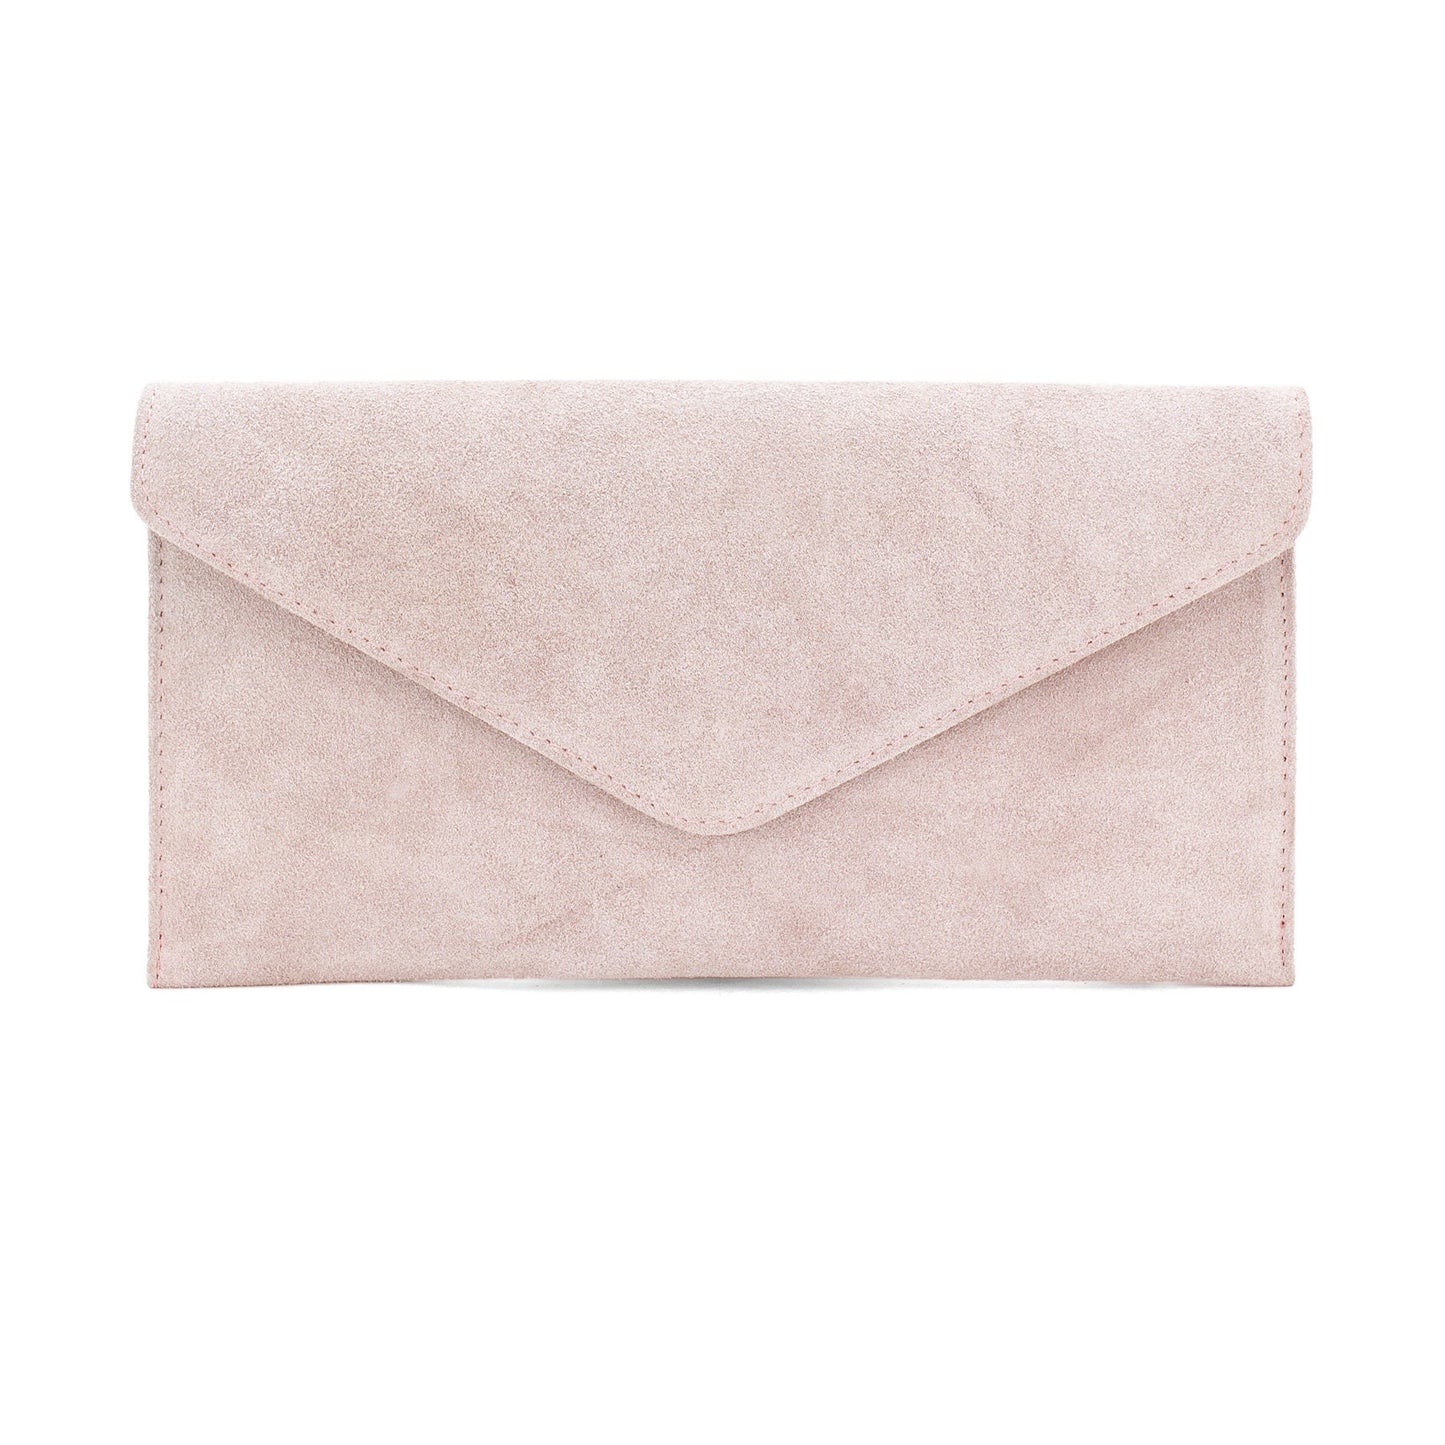  Nude envelope clutch bag